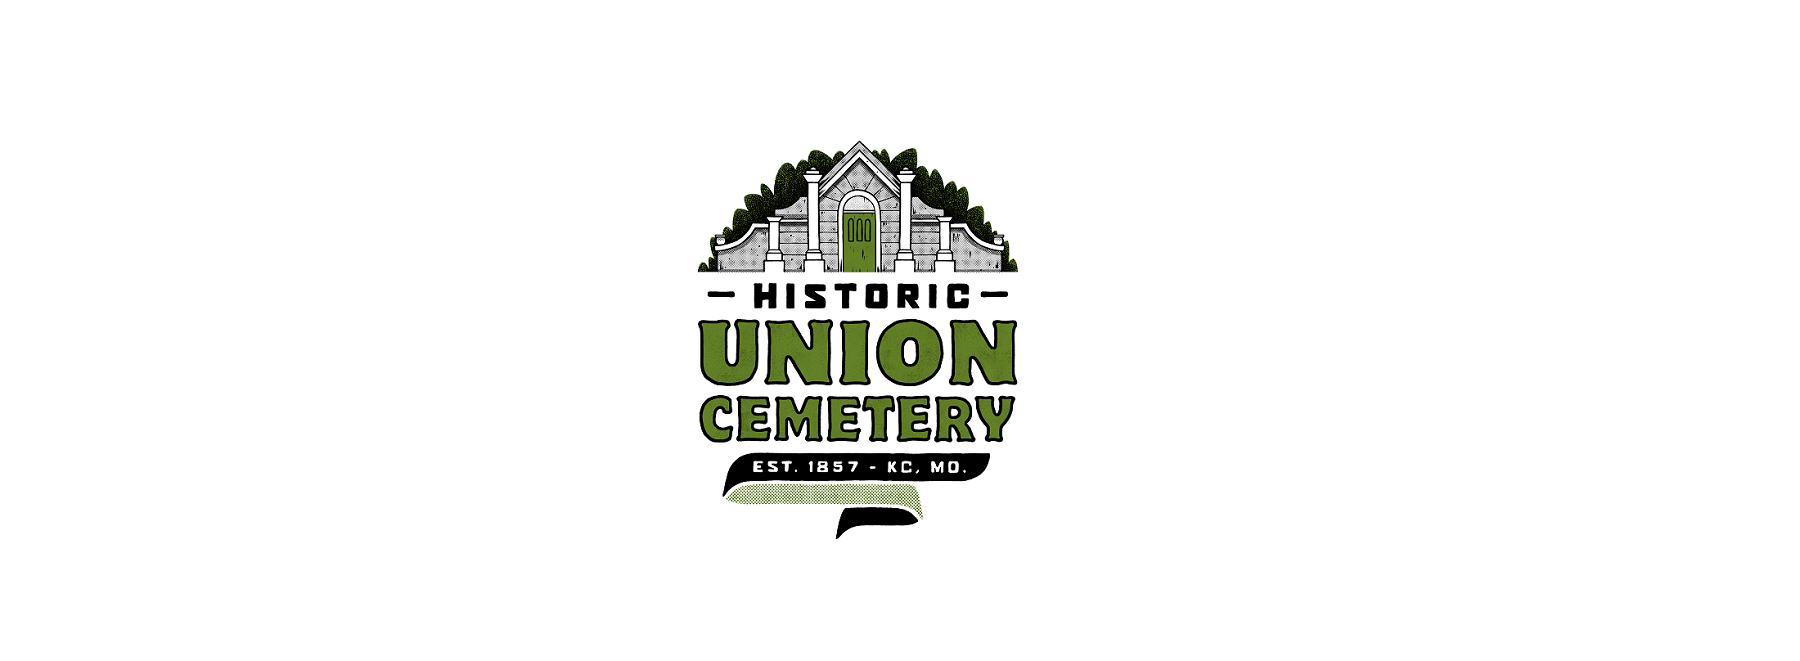 Union Cemetery Historical Society Of Kansas City Missouri